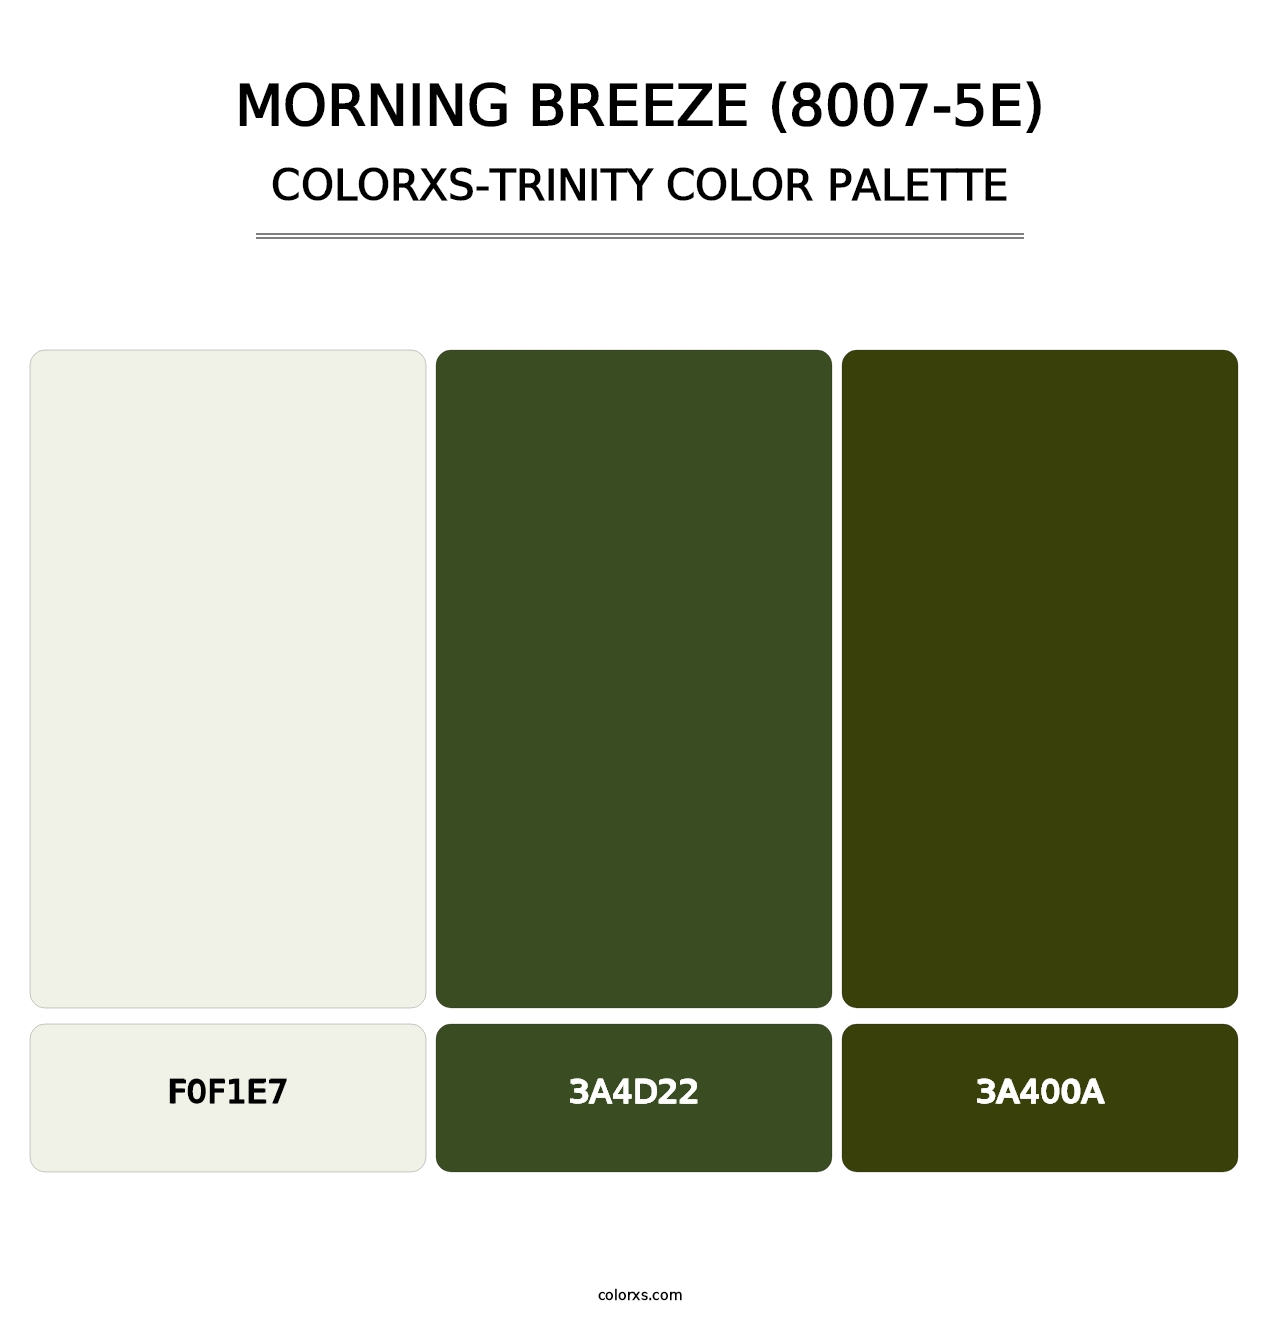 Morning Breeze (8007-5E) - Colorxs Trinity Palette